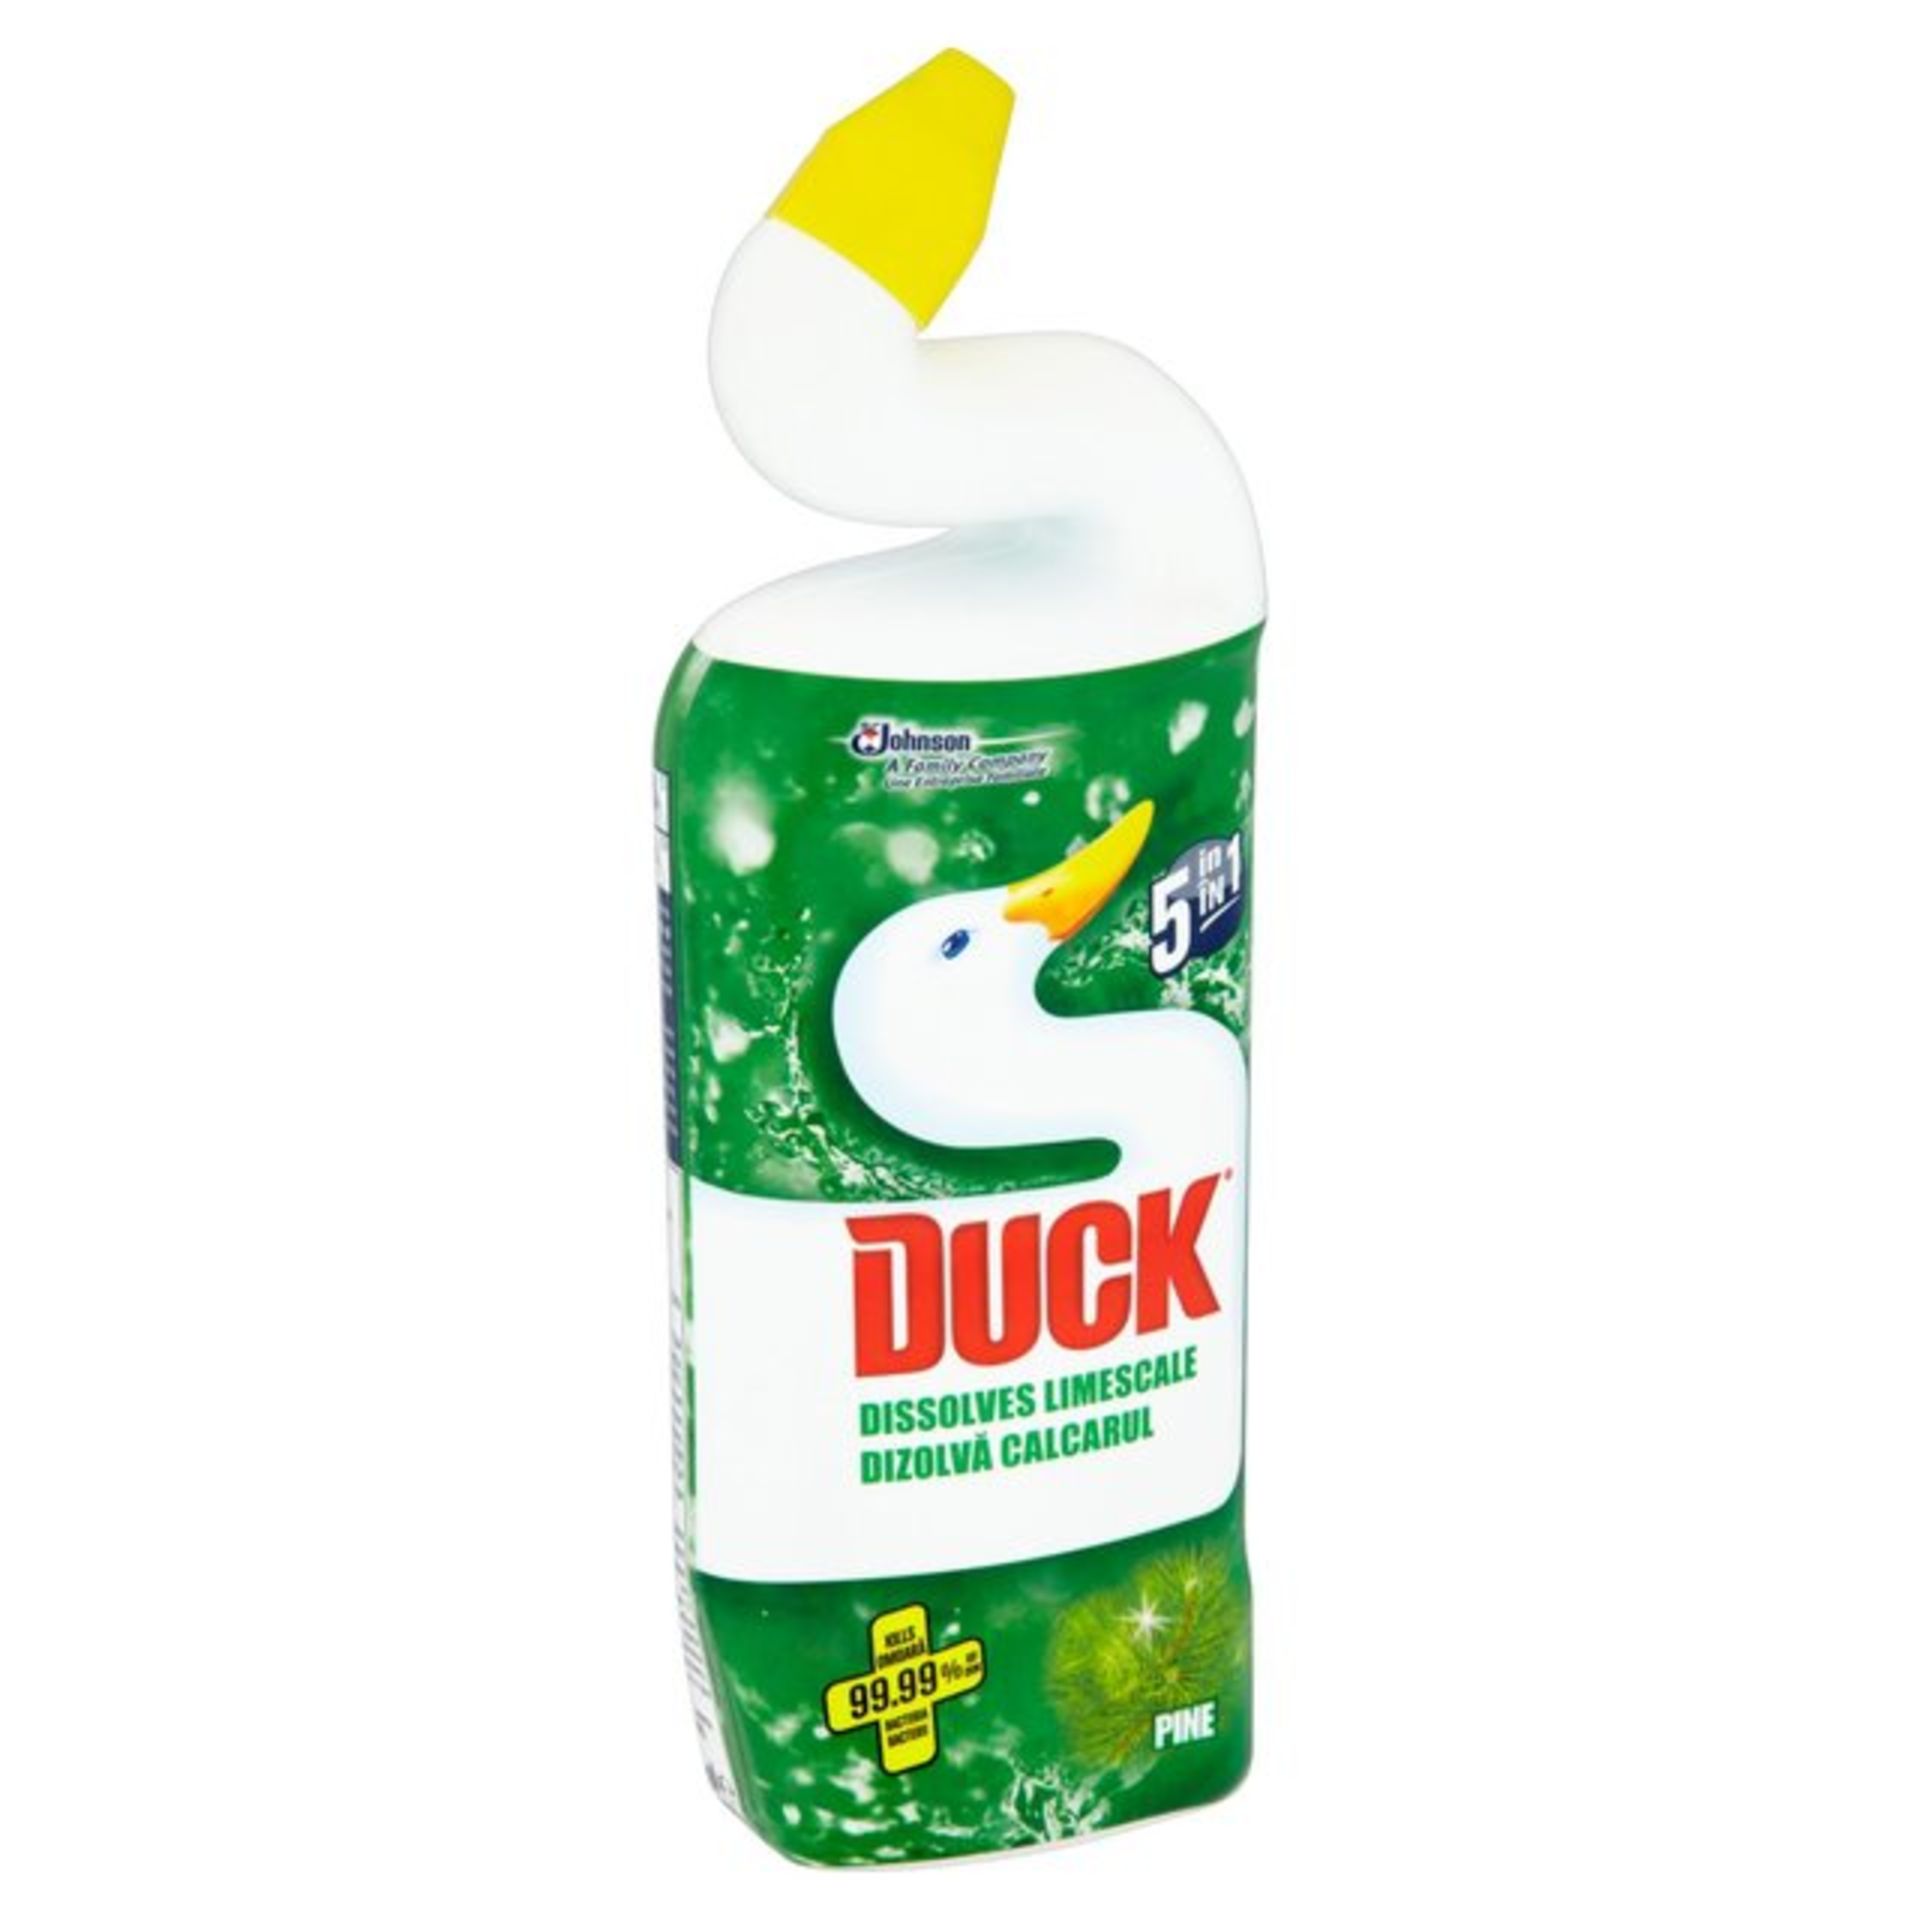 V *TRADE QTY* Brand New Six Bottles Toilet Duck Liquid 750ml Pine Fresh 5 In 1 ISP £18.66 Viking